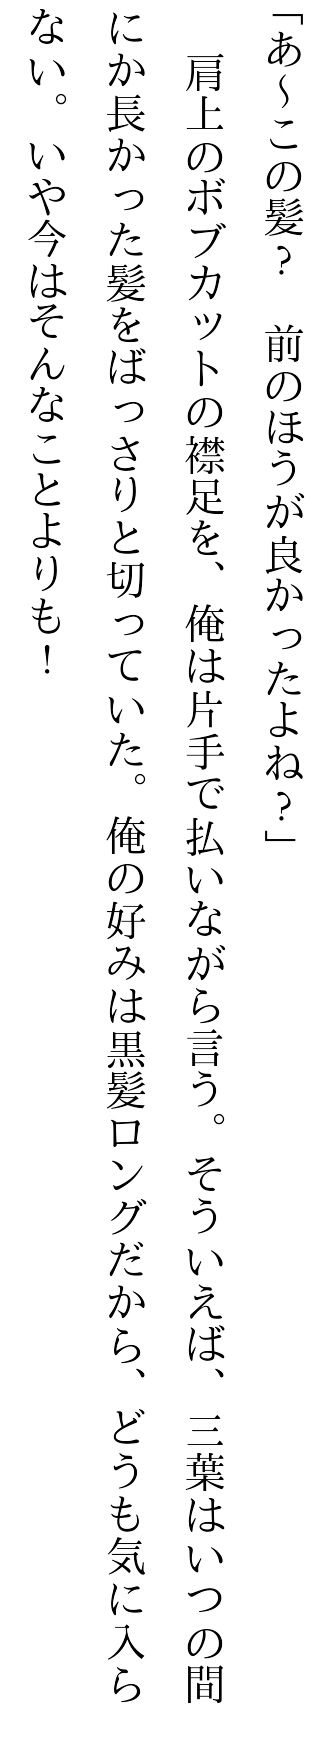 [Image] "is your name. "Miyamizu trefoil's healing power is abnormal wwwww 2